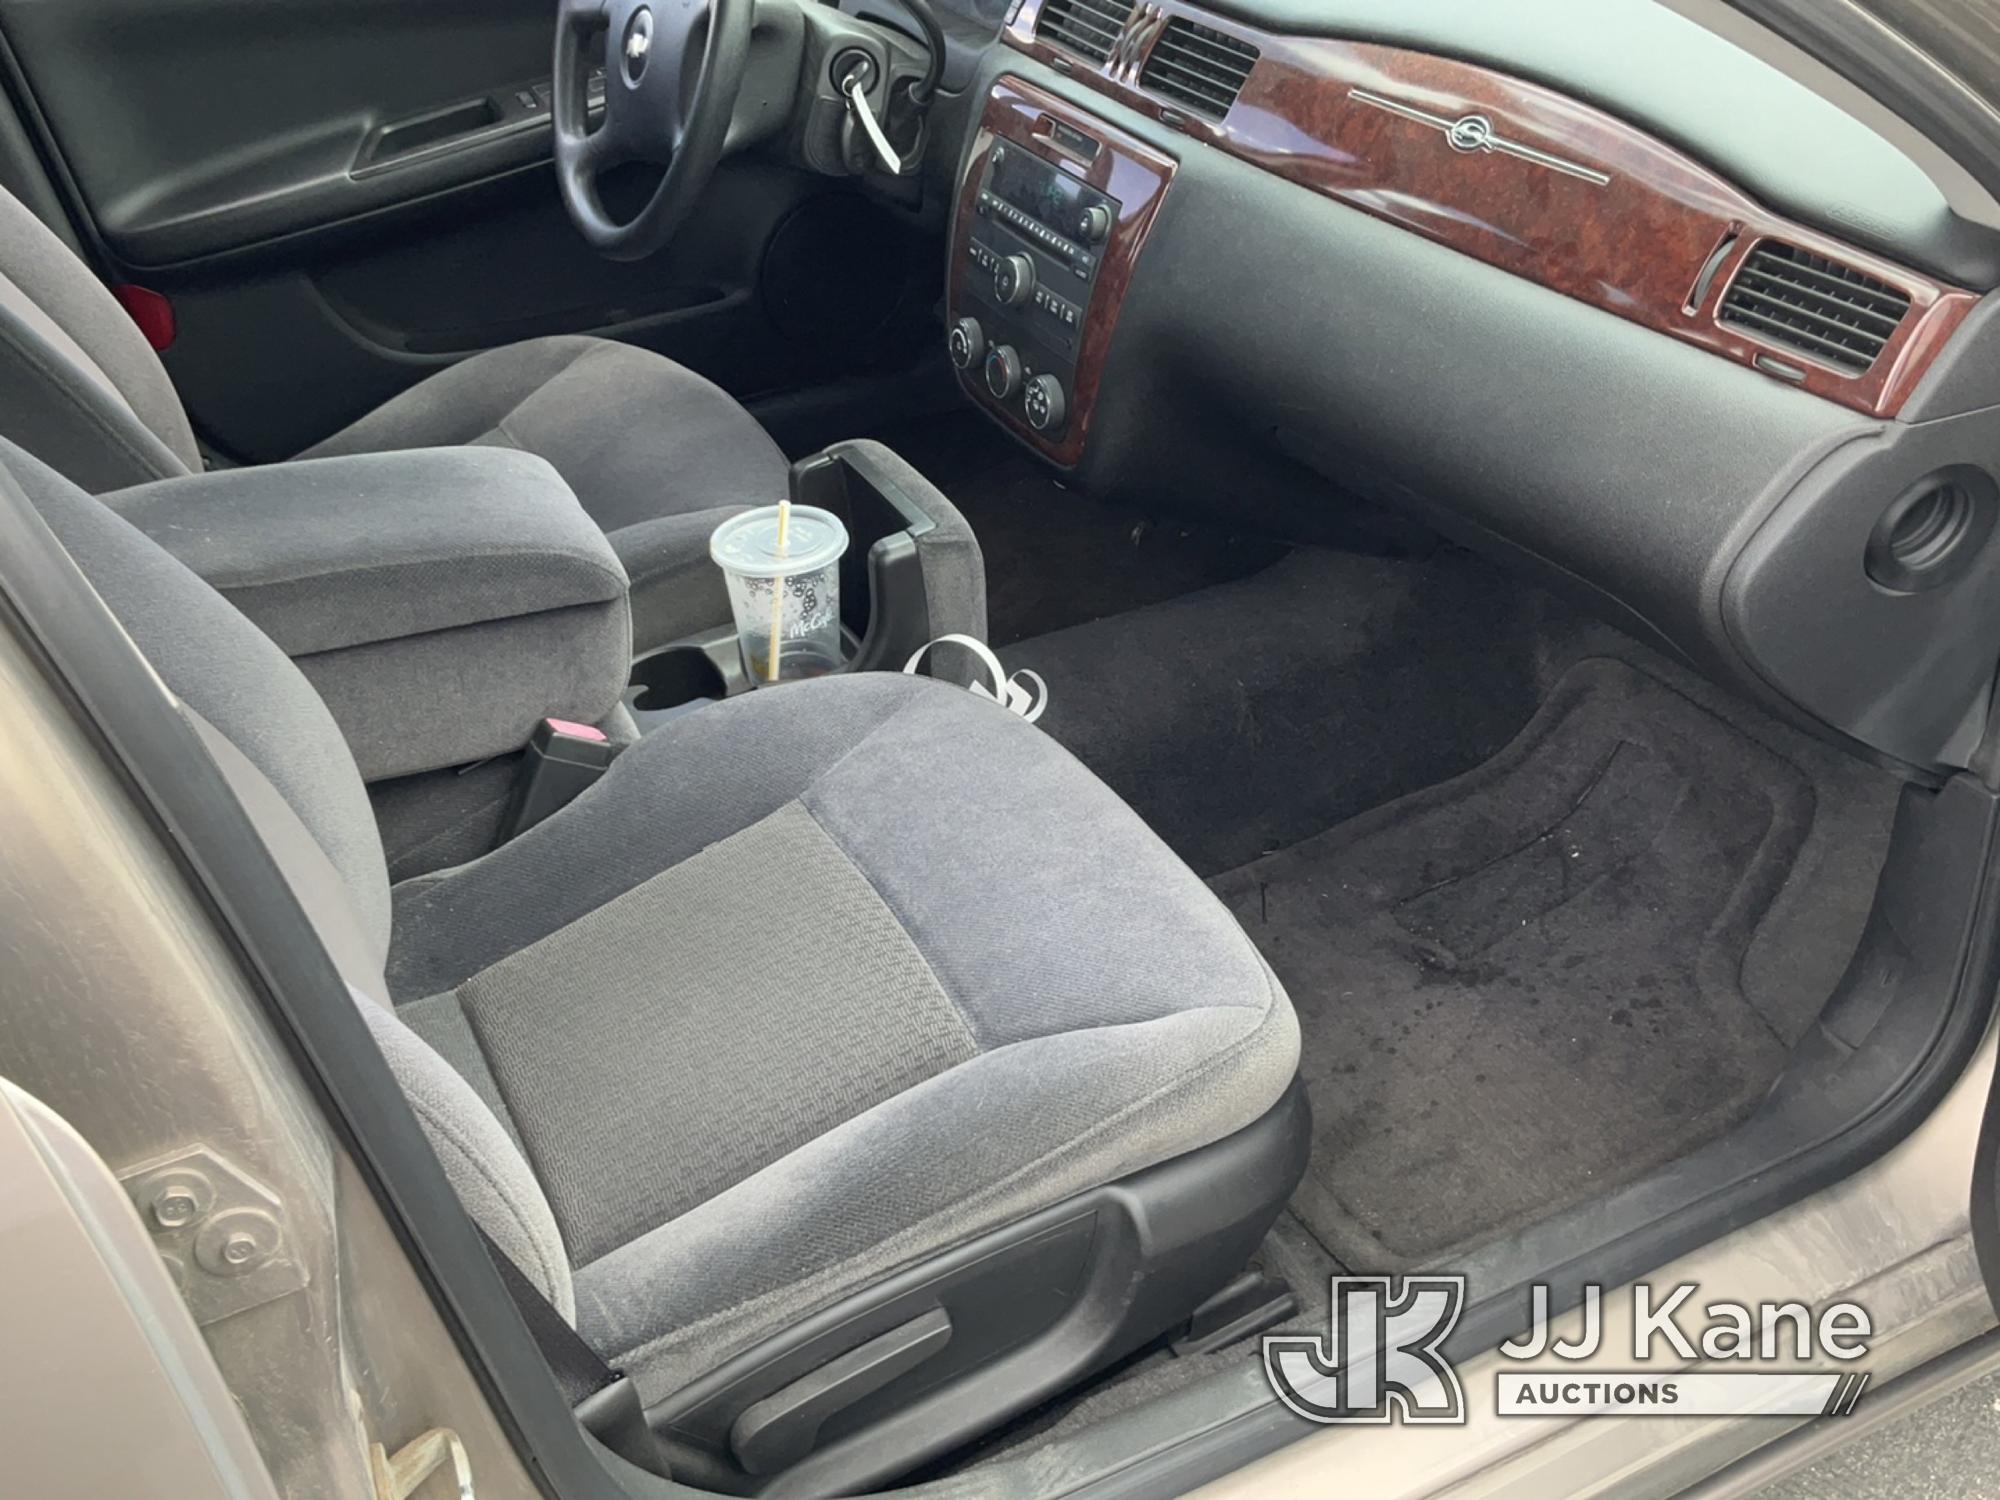 (Salt Lake City, UT) 2007 Chevrolet Impala 4-Door Sedan Runs & Moves) (Body Damage, Bad Paint, Drive